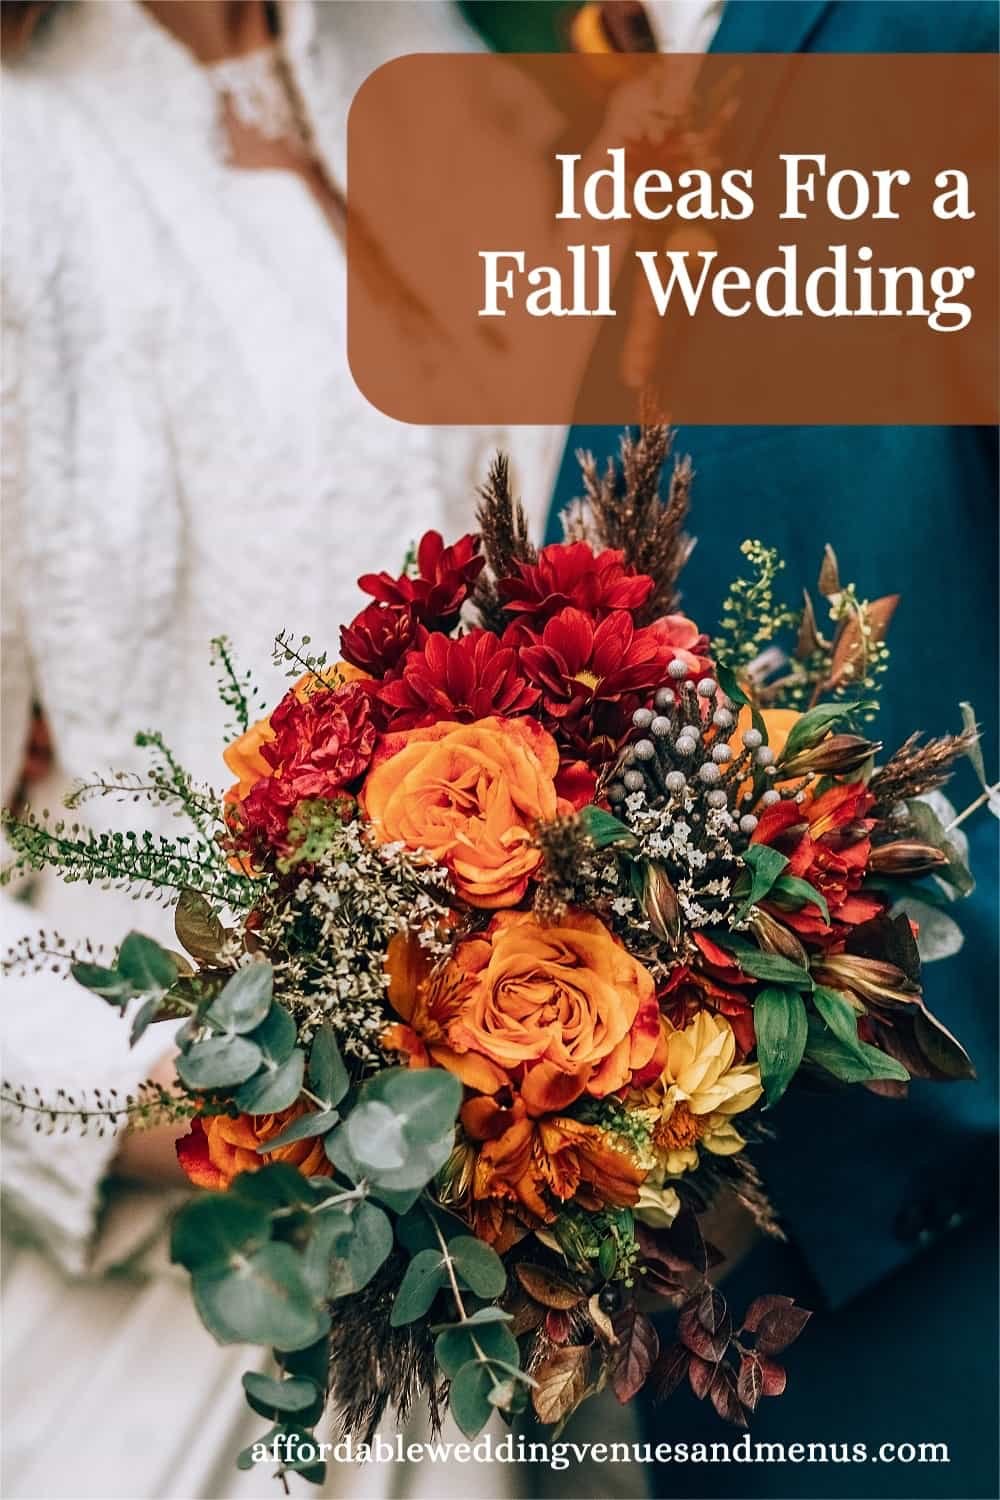 Rustic Wedding Ideas: Budget-Friendly Themes, Decor & More